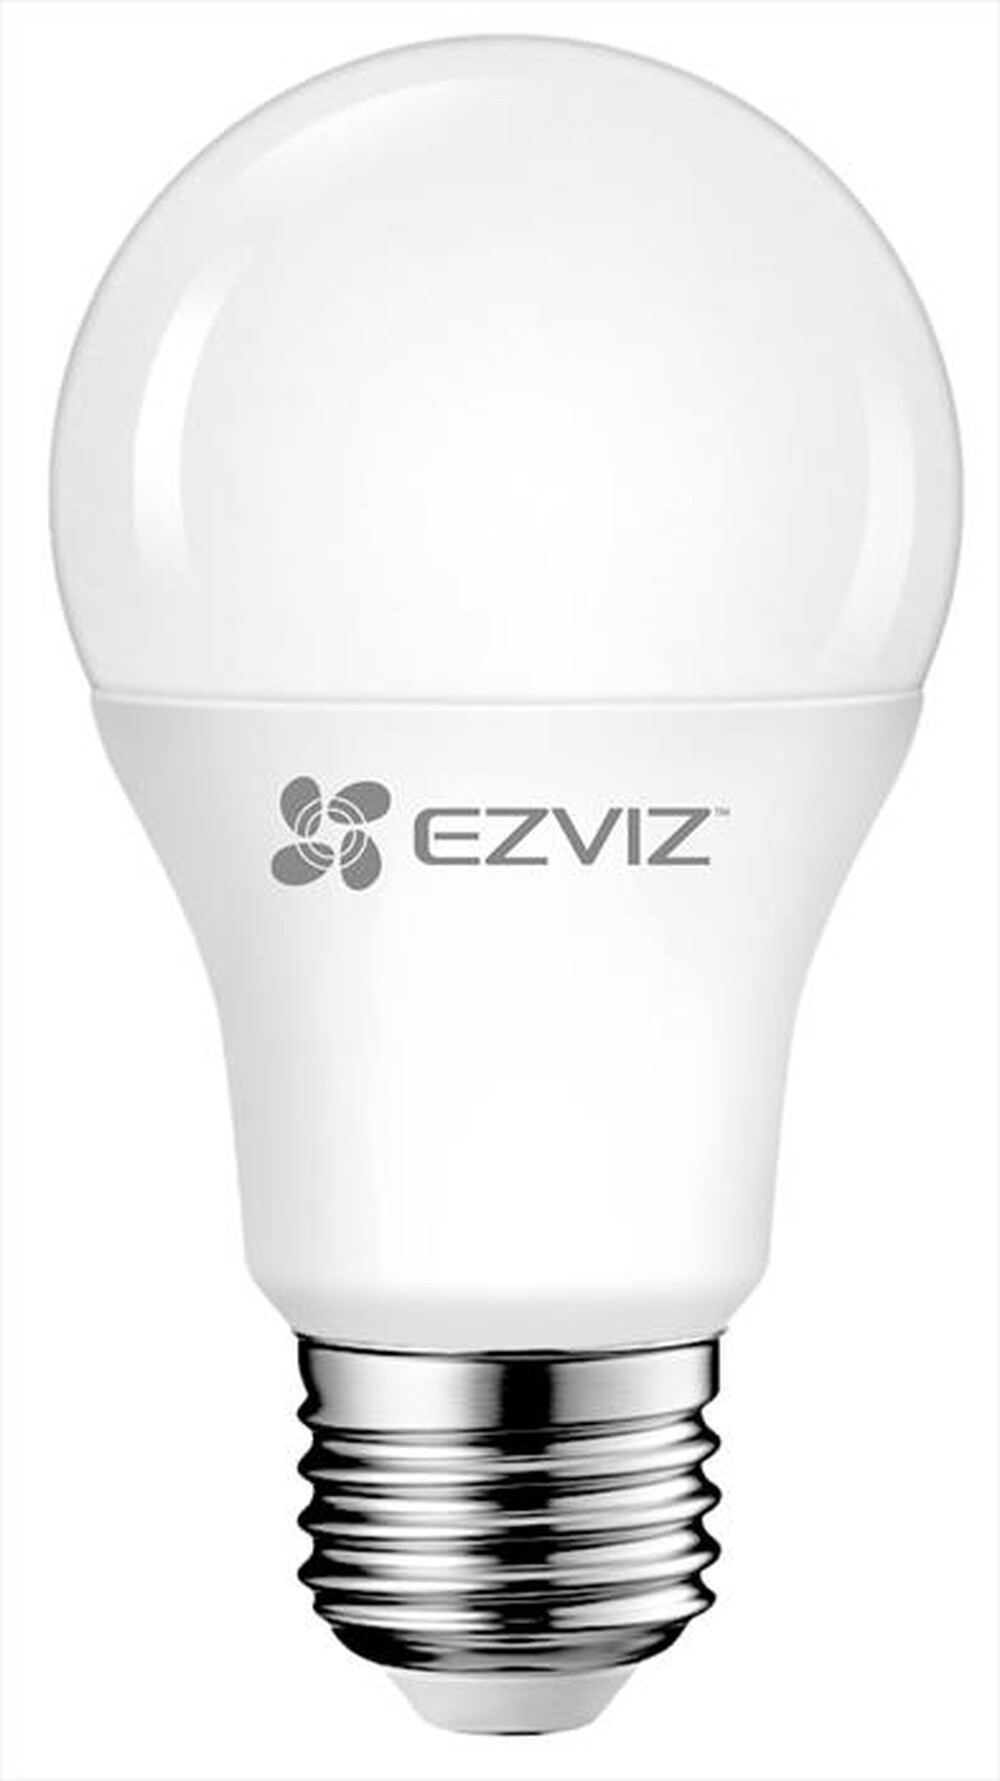 "HINNOVATION - KIT DI 3 LAMPADINE SMART EZVIZ LB1 BIANCO, E27-White"